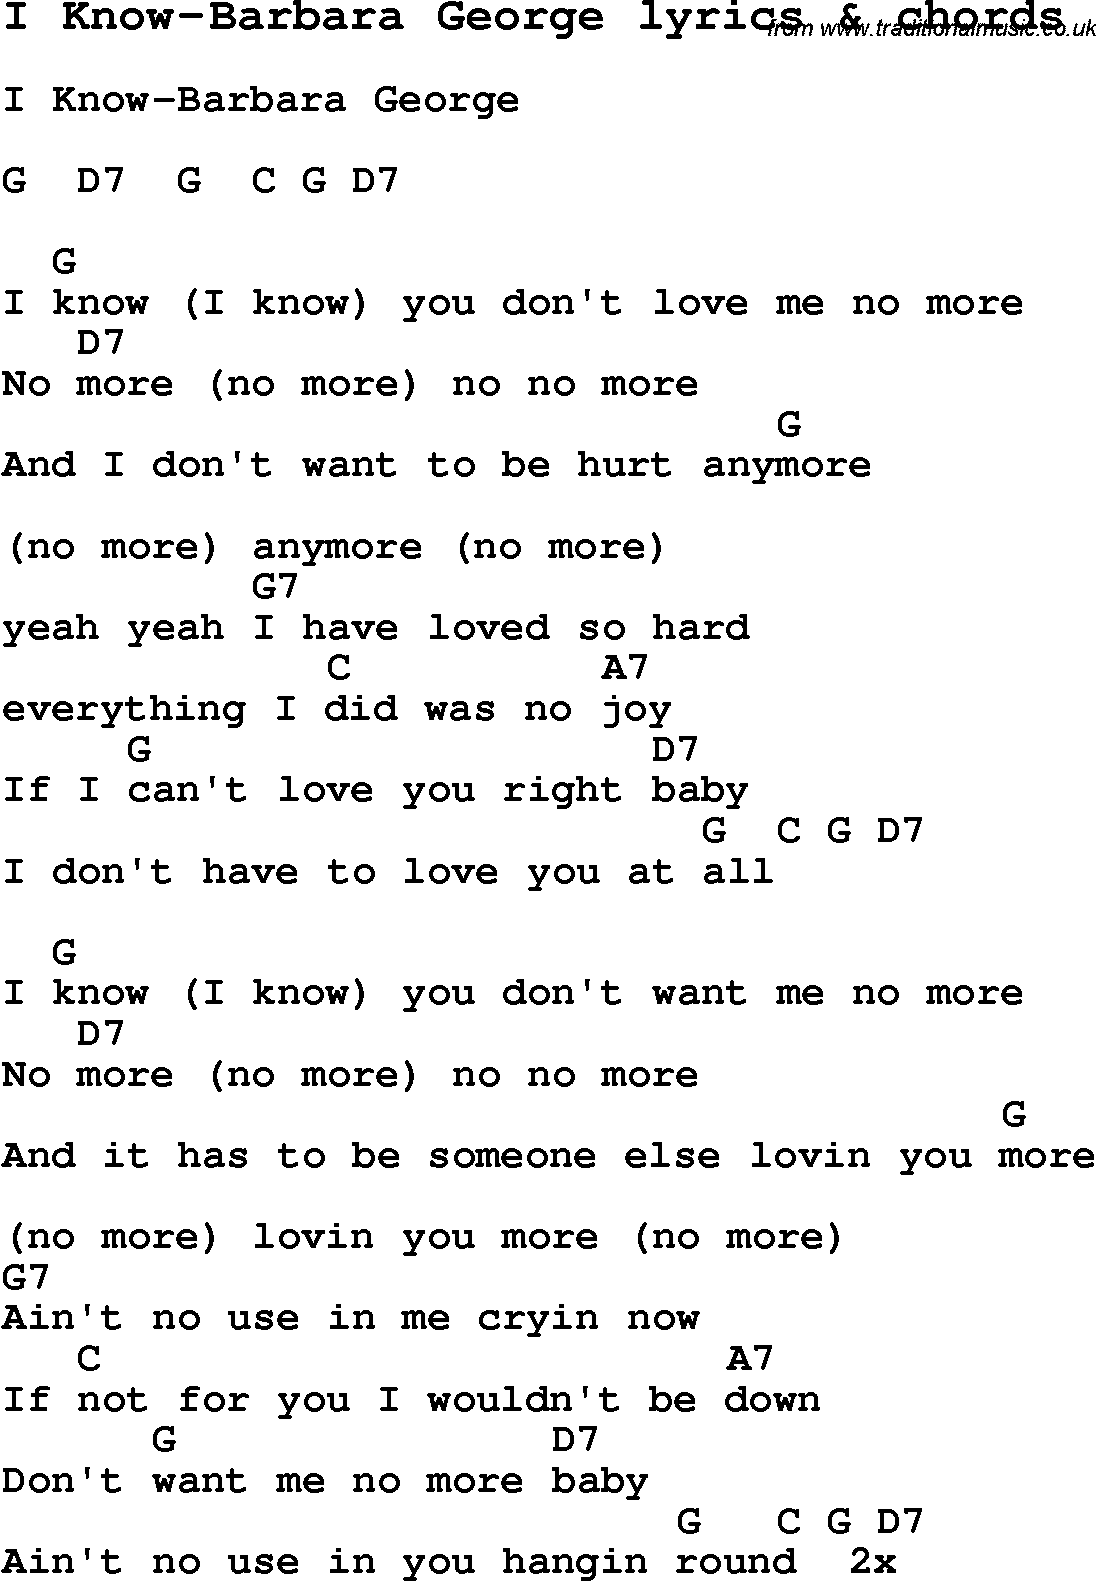 Love Song Lyrics for: I Know-Barbara George with chords for Ukulele, Guitar Banjo etc.